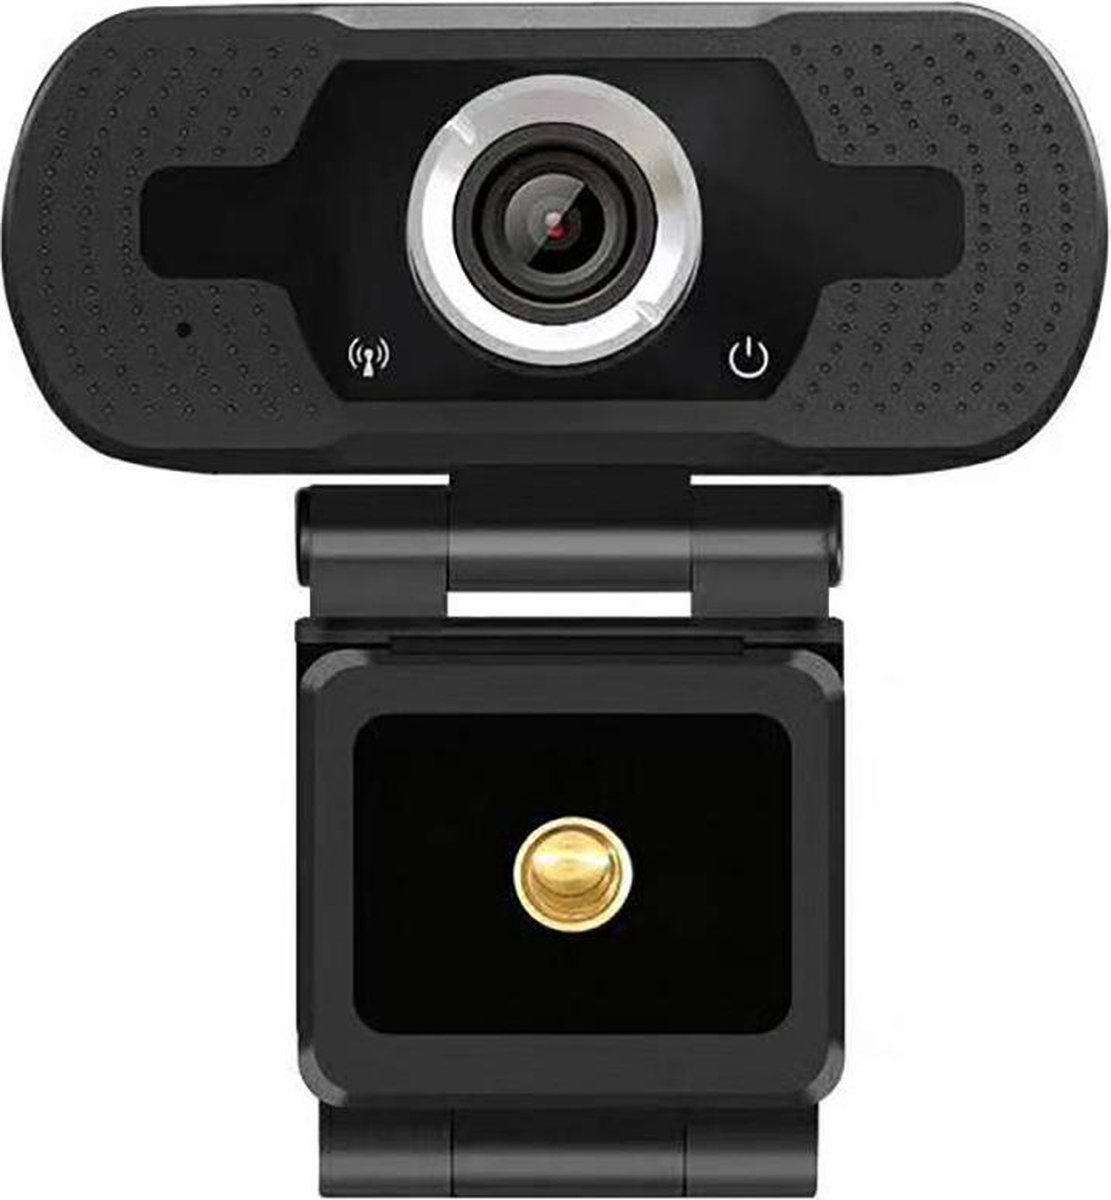 NÖRDIC - EC-A258 - Webcam met microfoon voor PC, laptop, Webcamera - HD 1080p - Zwart